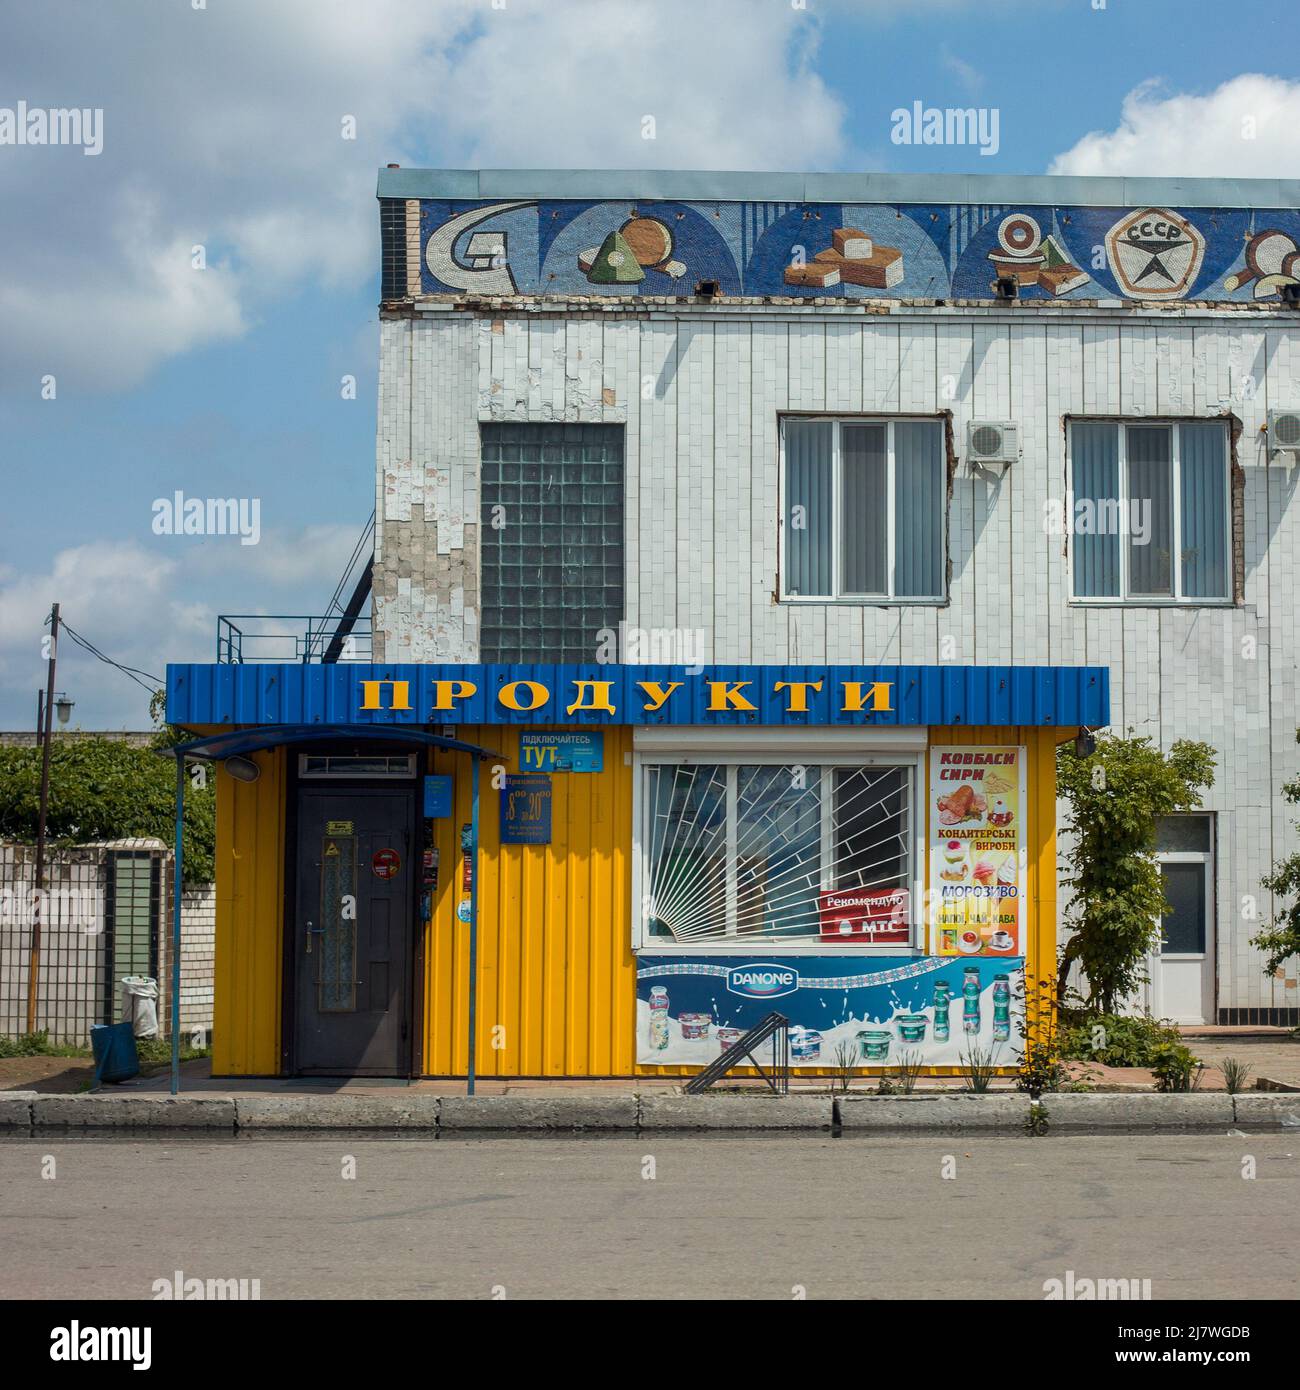 Michael Bunel / Le Pictorium -  The colors of Ukraine -  10/05/2014  -  Ukraine / Donbass / Odessa  -  A church with the colors of the Ukrainian flag Stock Photo